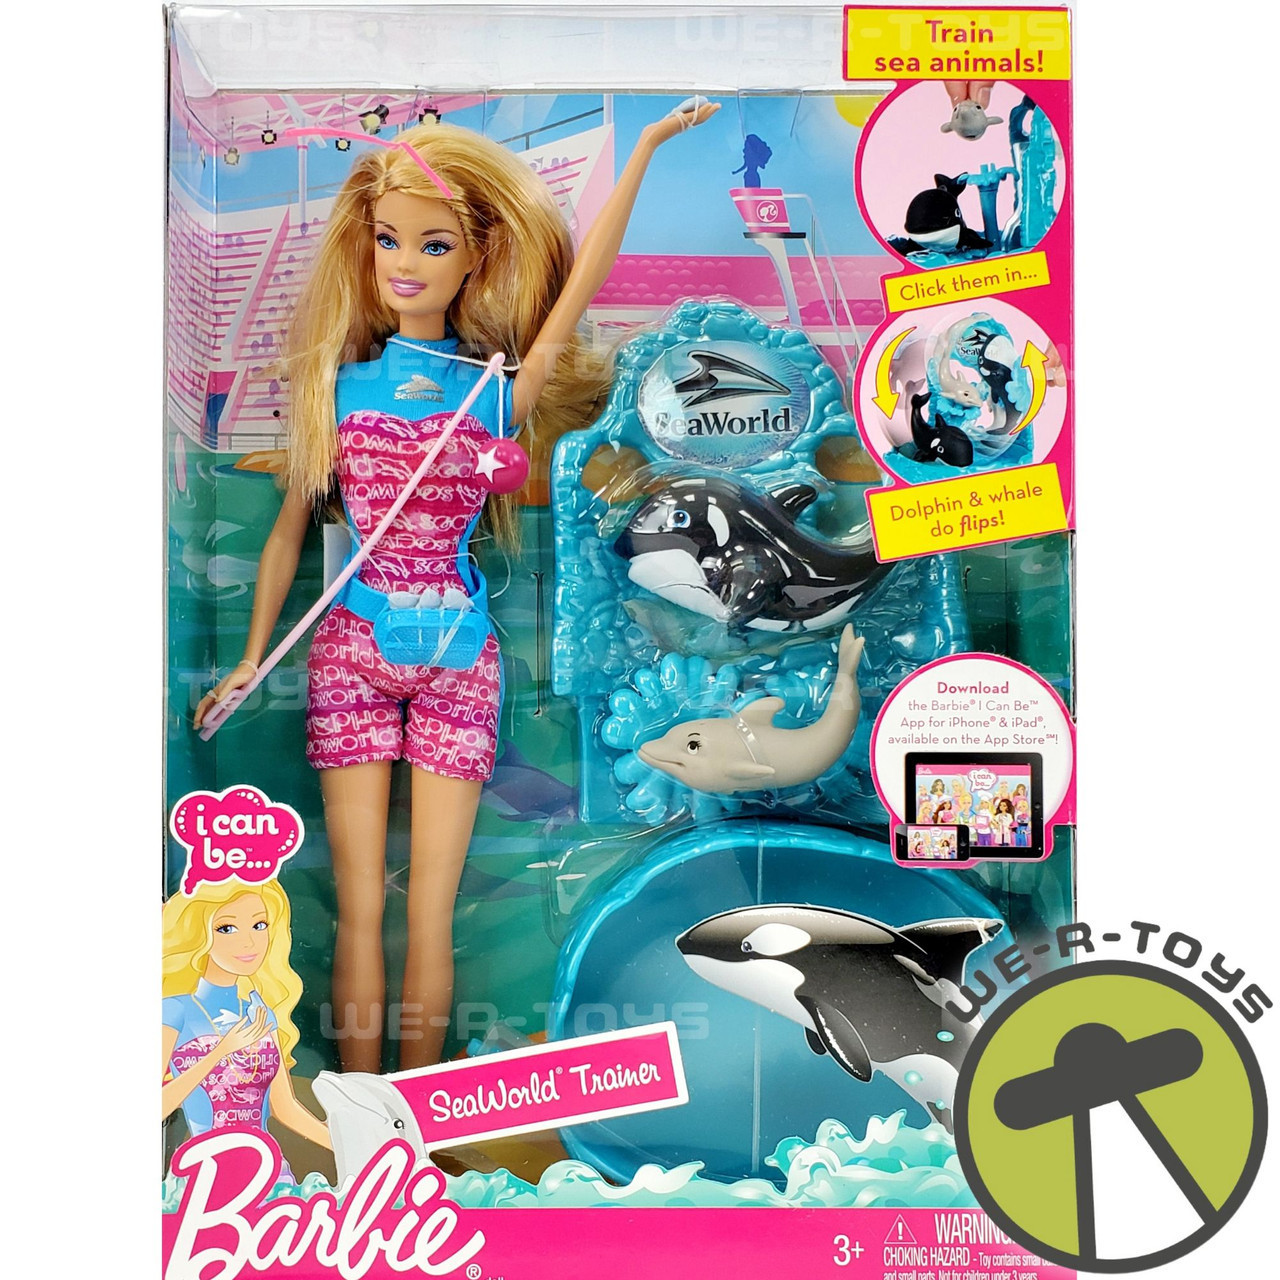 Barbie I Can Be SeaWorld Trainer Doll Play Set 2010 Mattel #N4886 NRFB